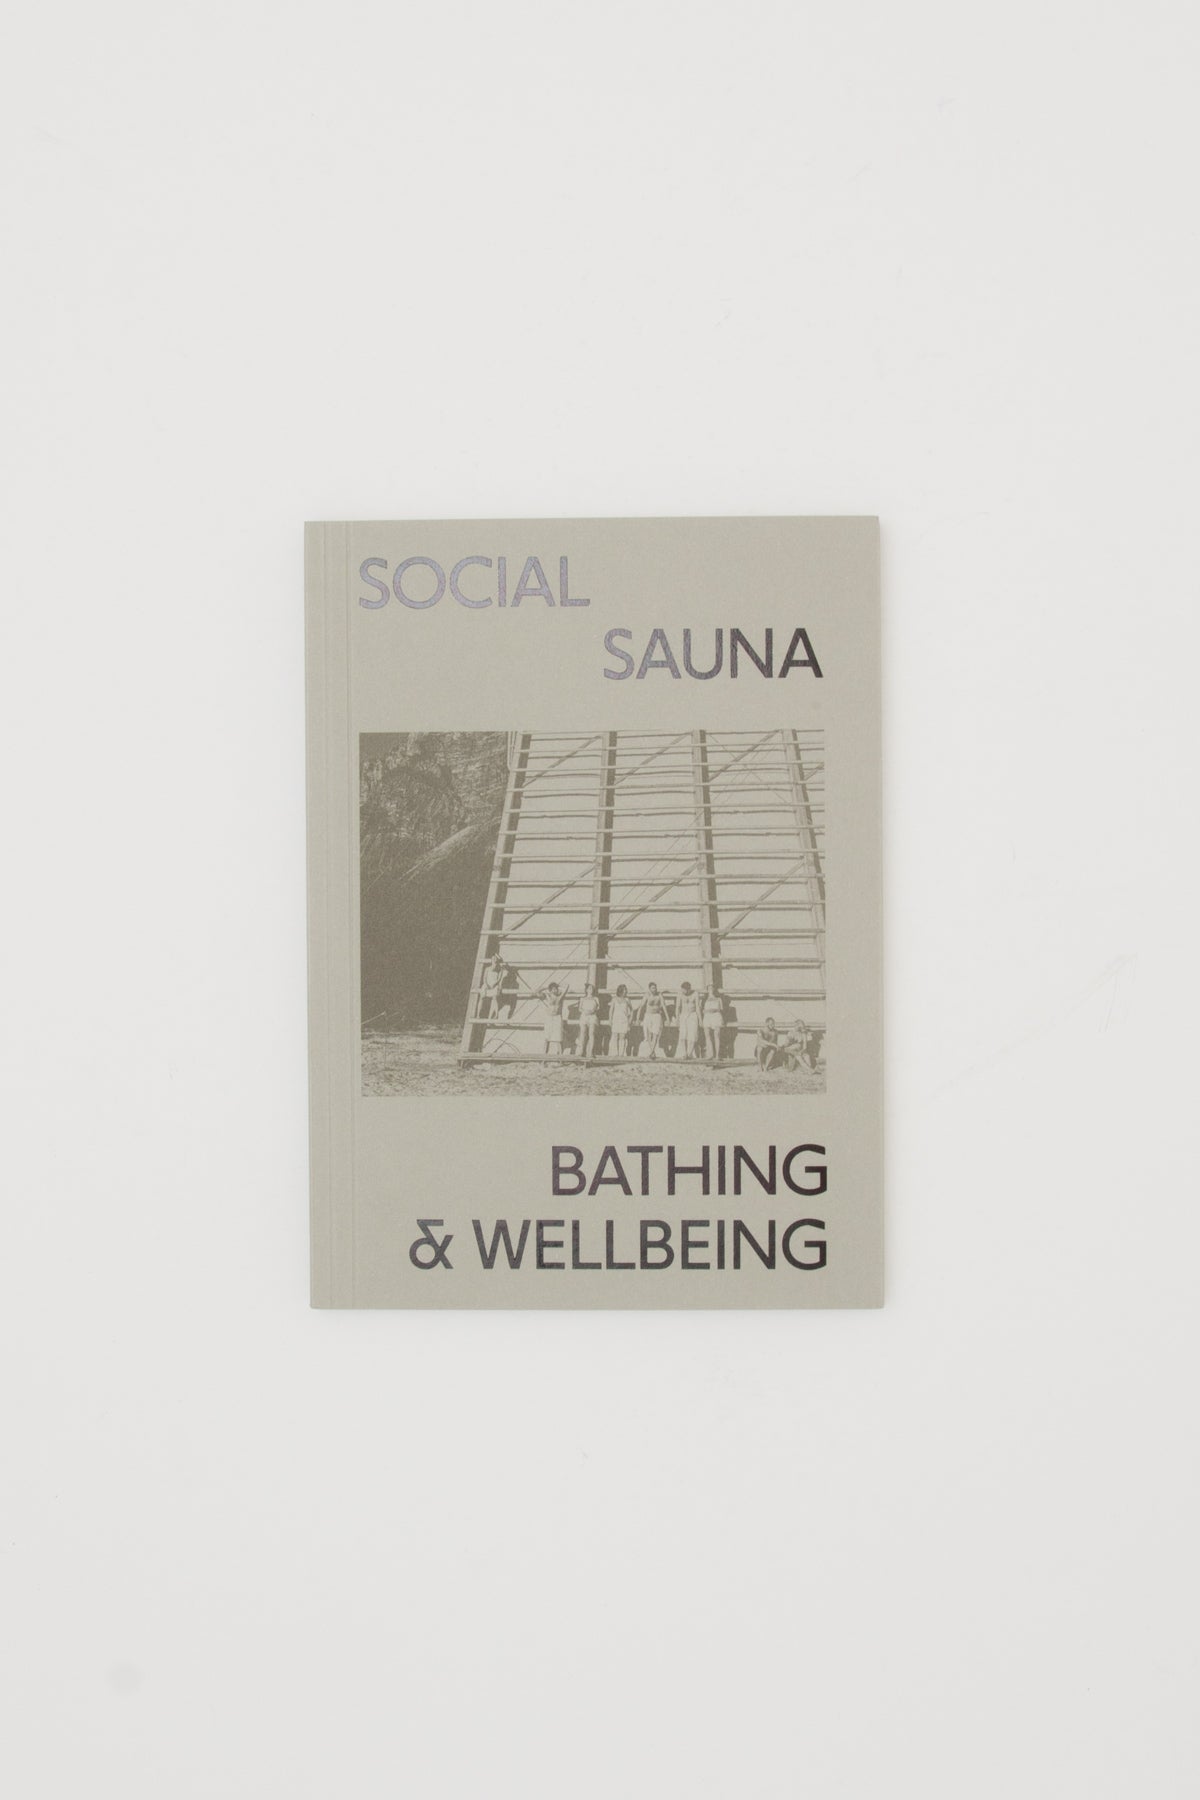 Social Sauna - Bathing & Wellbeing